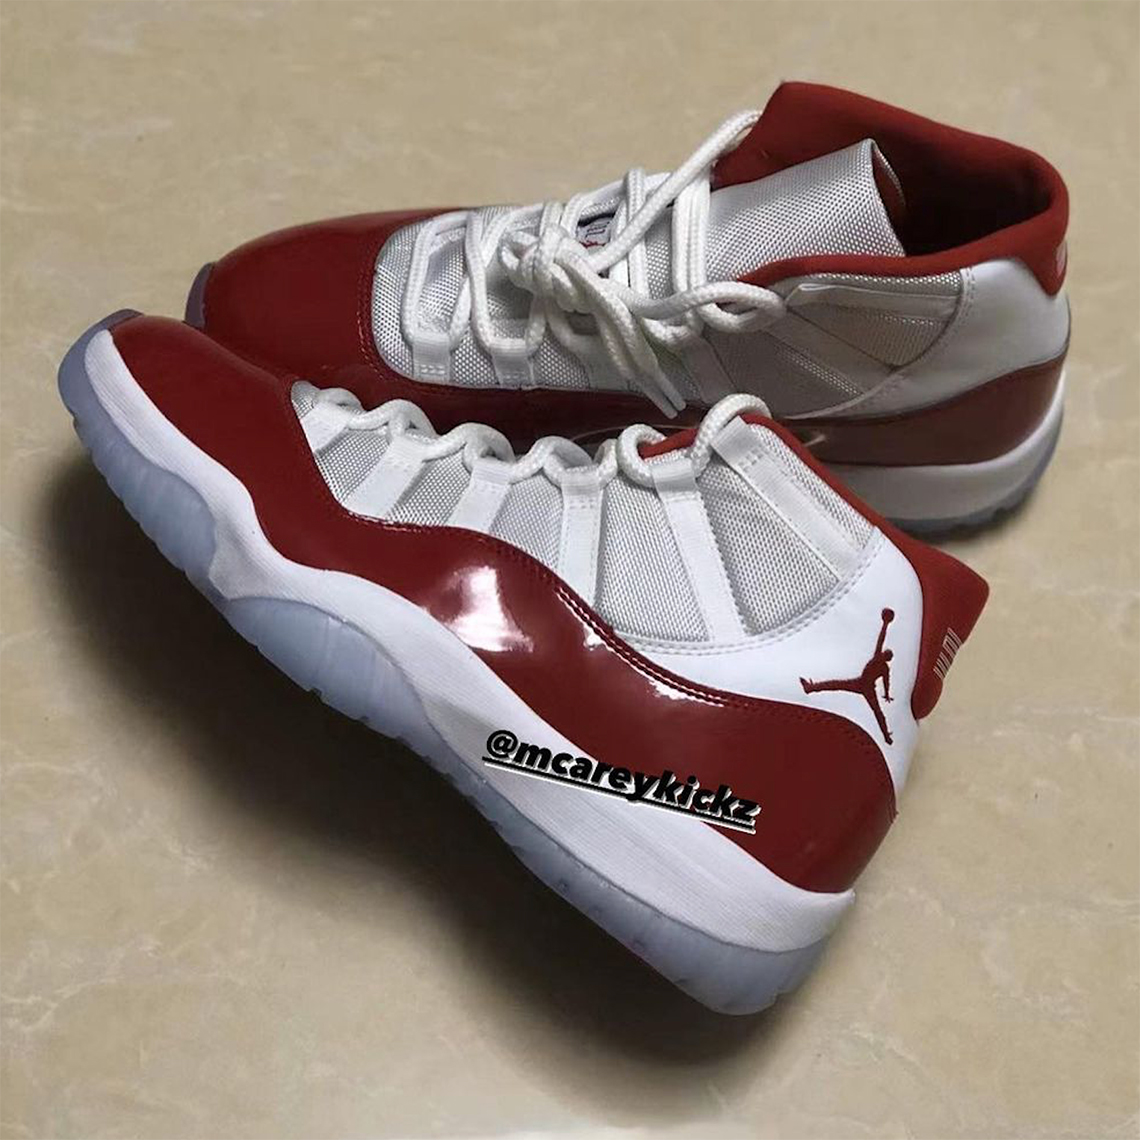 Jordan 11 Cherry Release Date 6